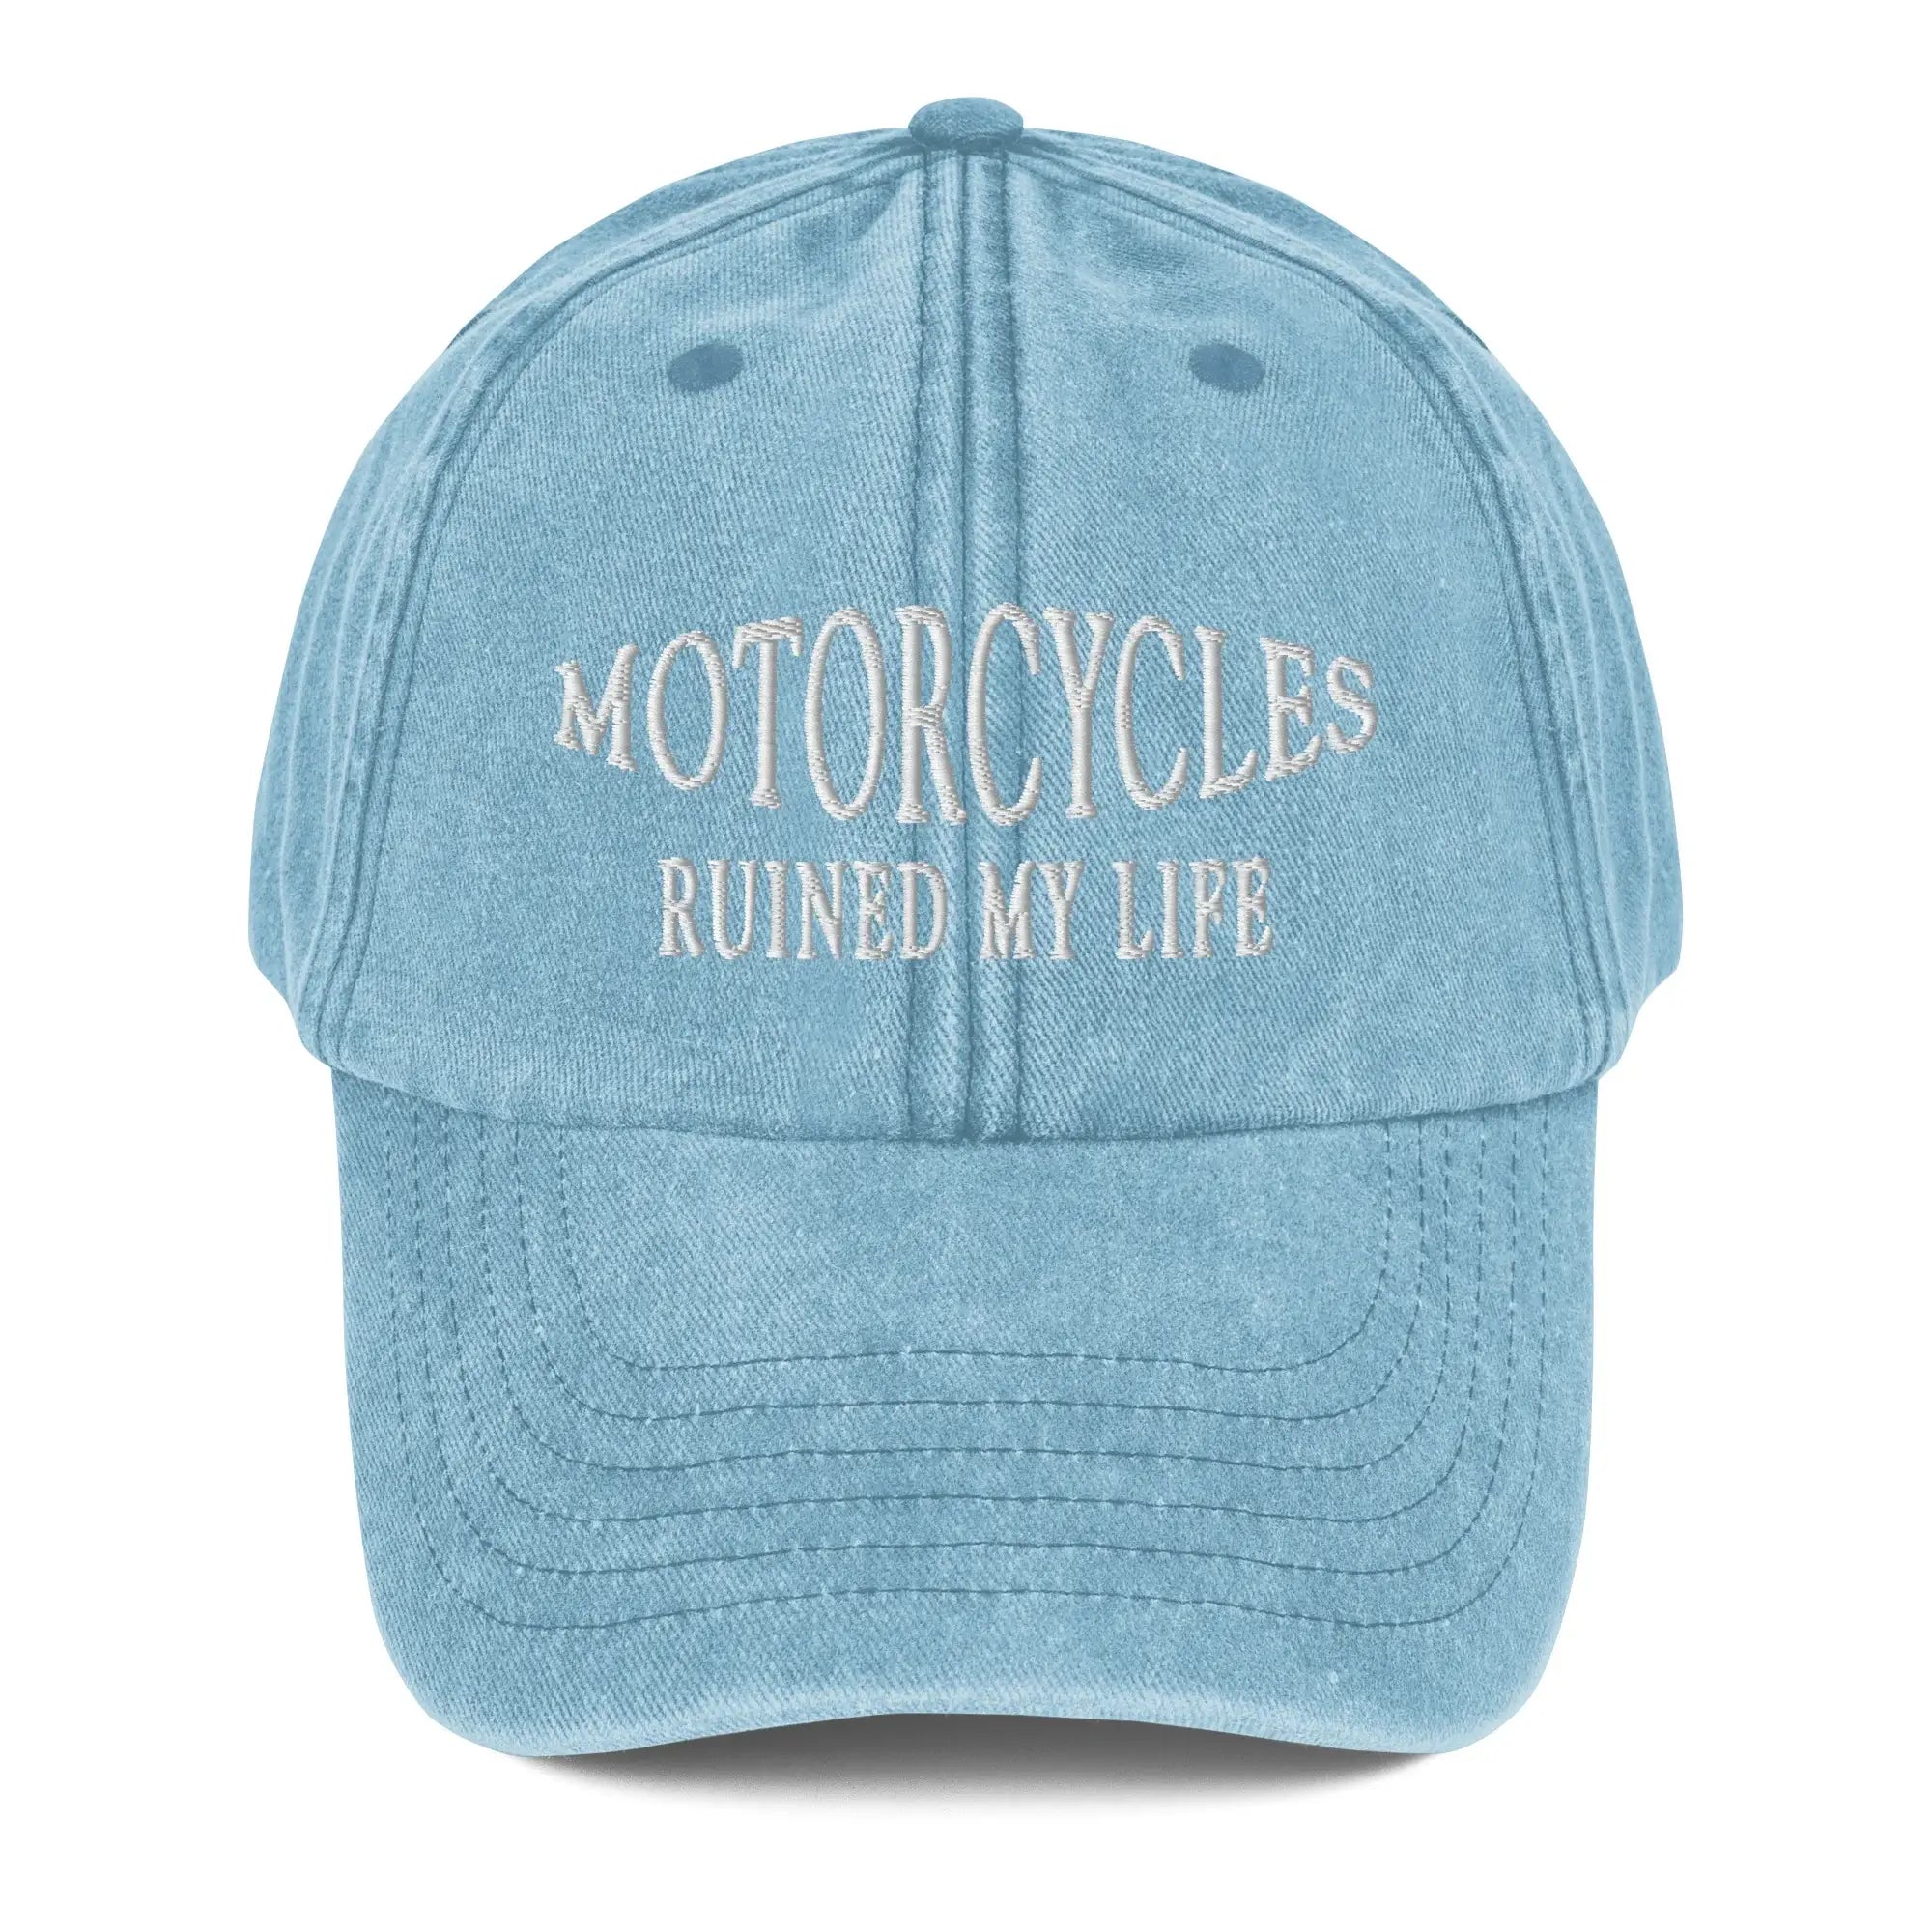 Motorcycles Ruined My Life {Gorra Vintage}